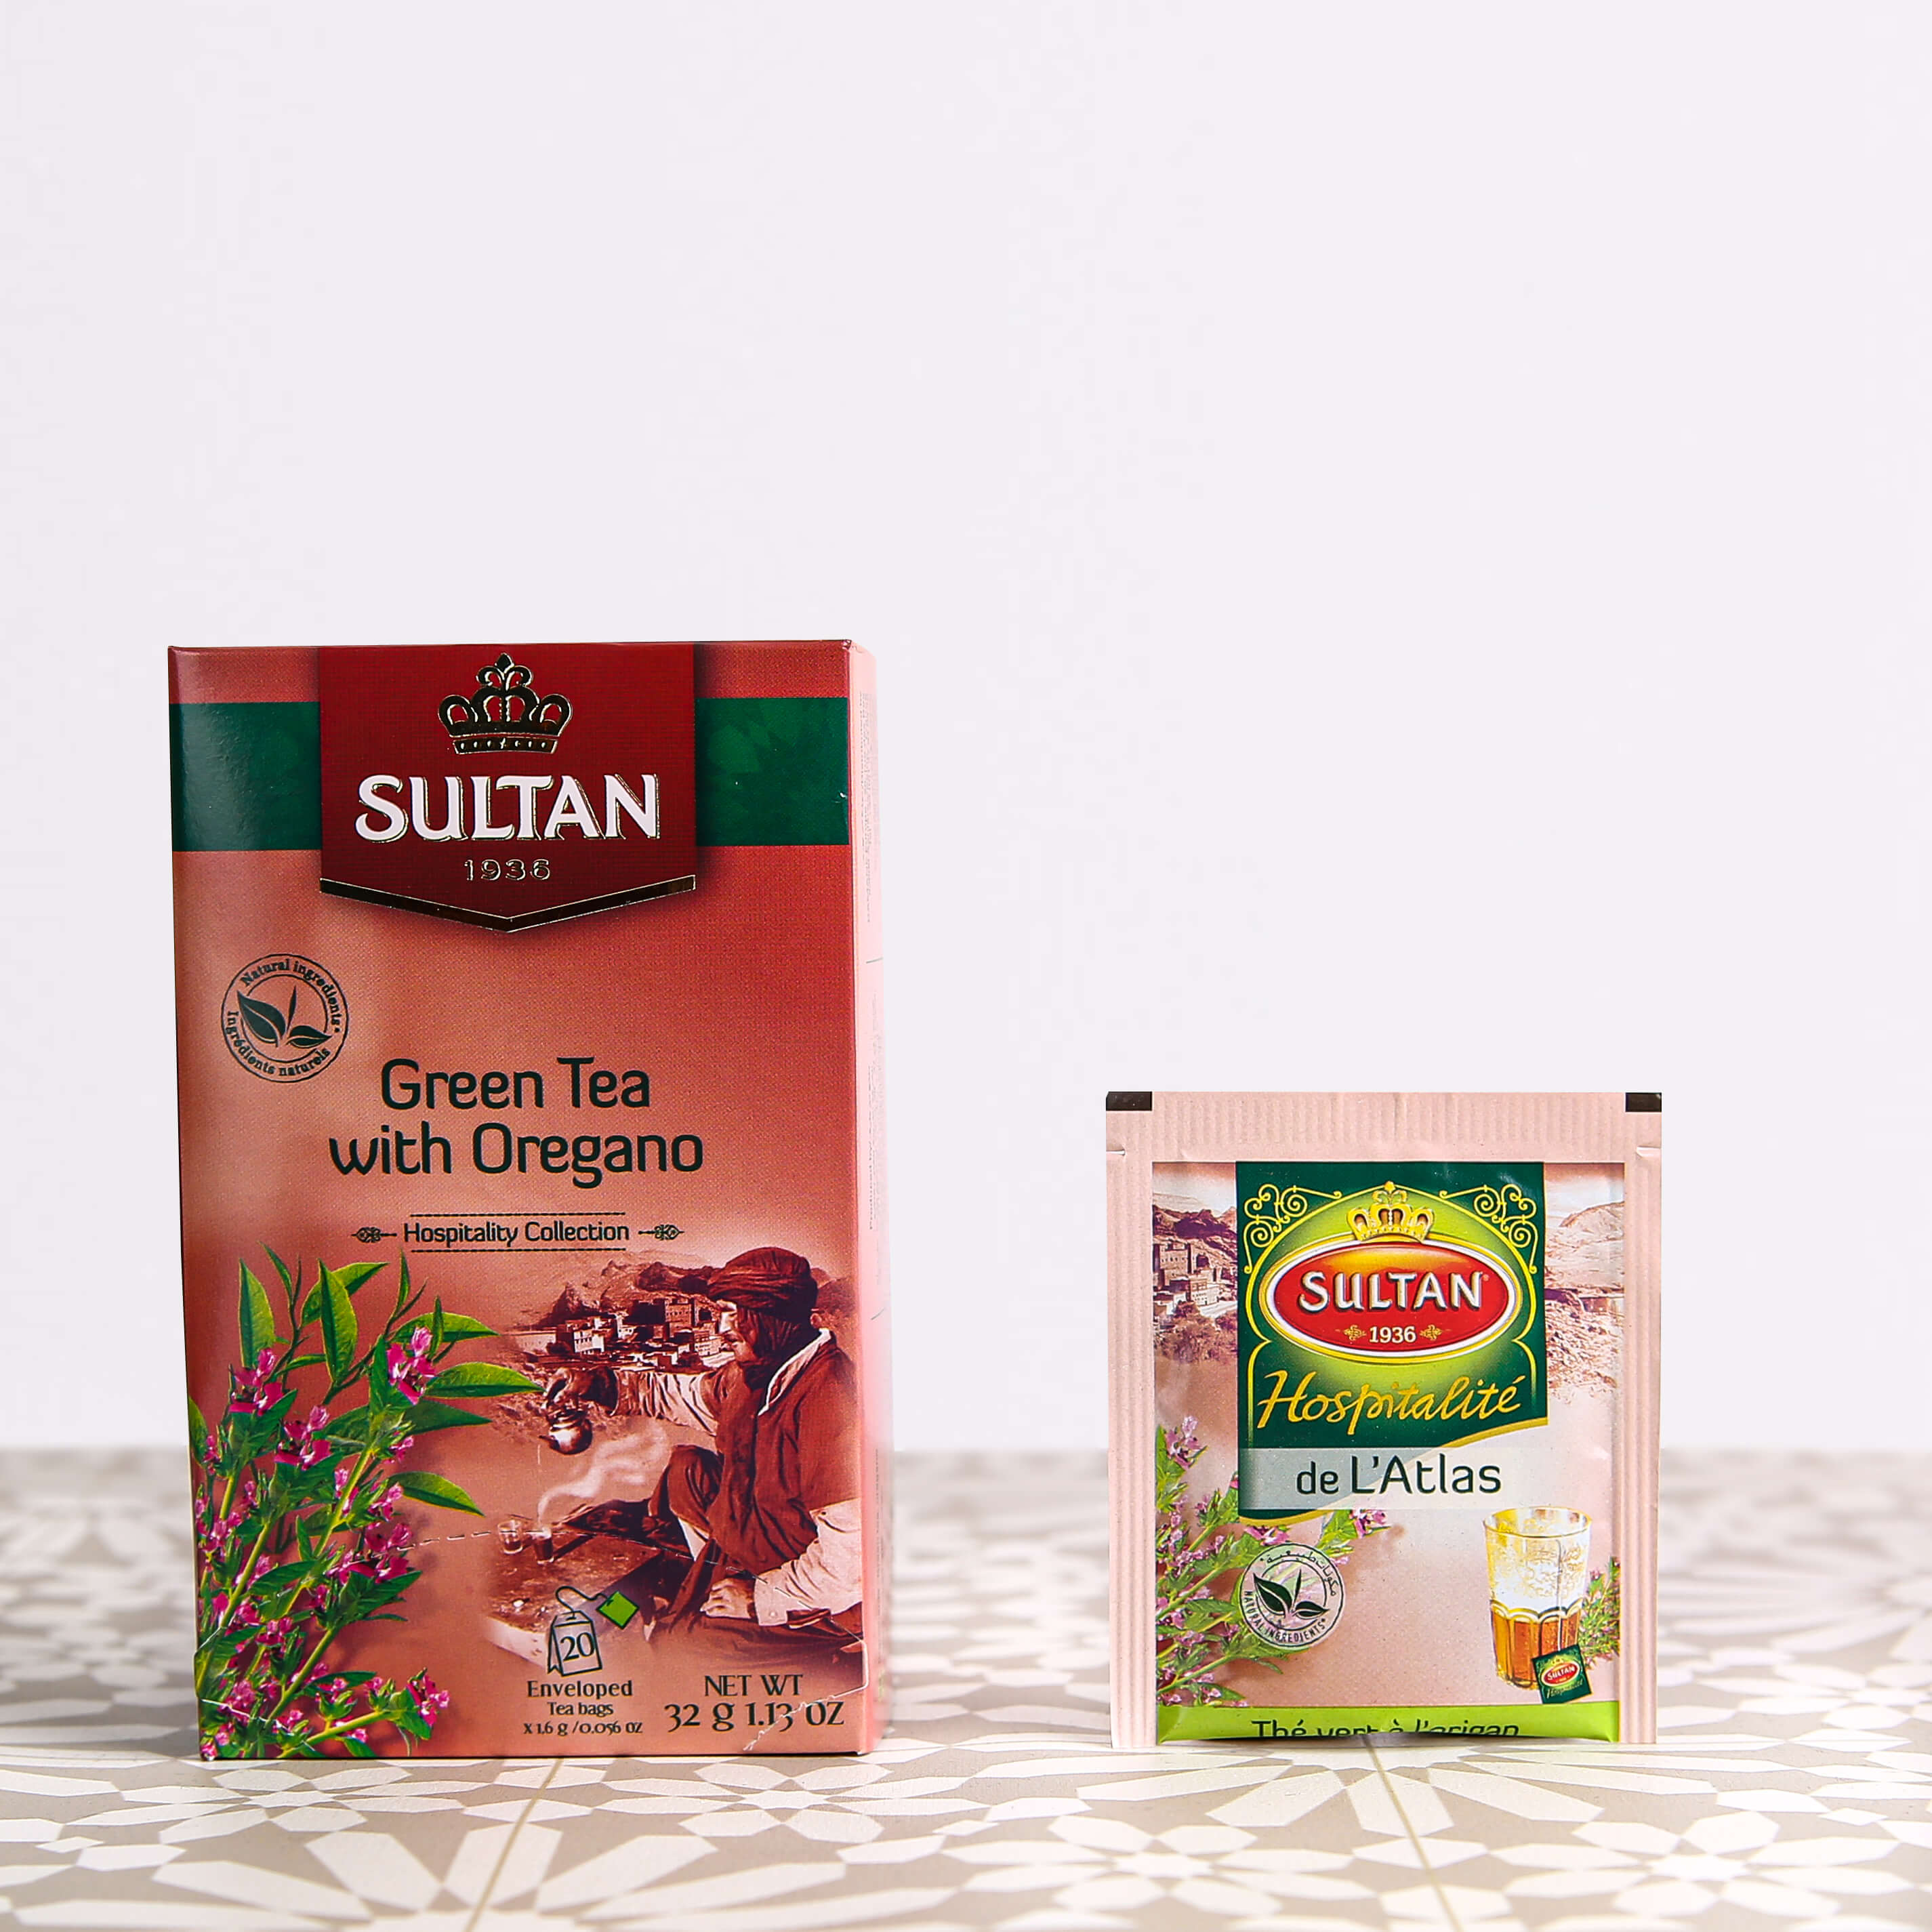 The Vert Exclusif A L Origan The Du Sultan Sultan Tea